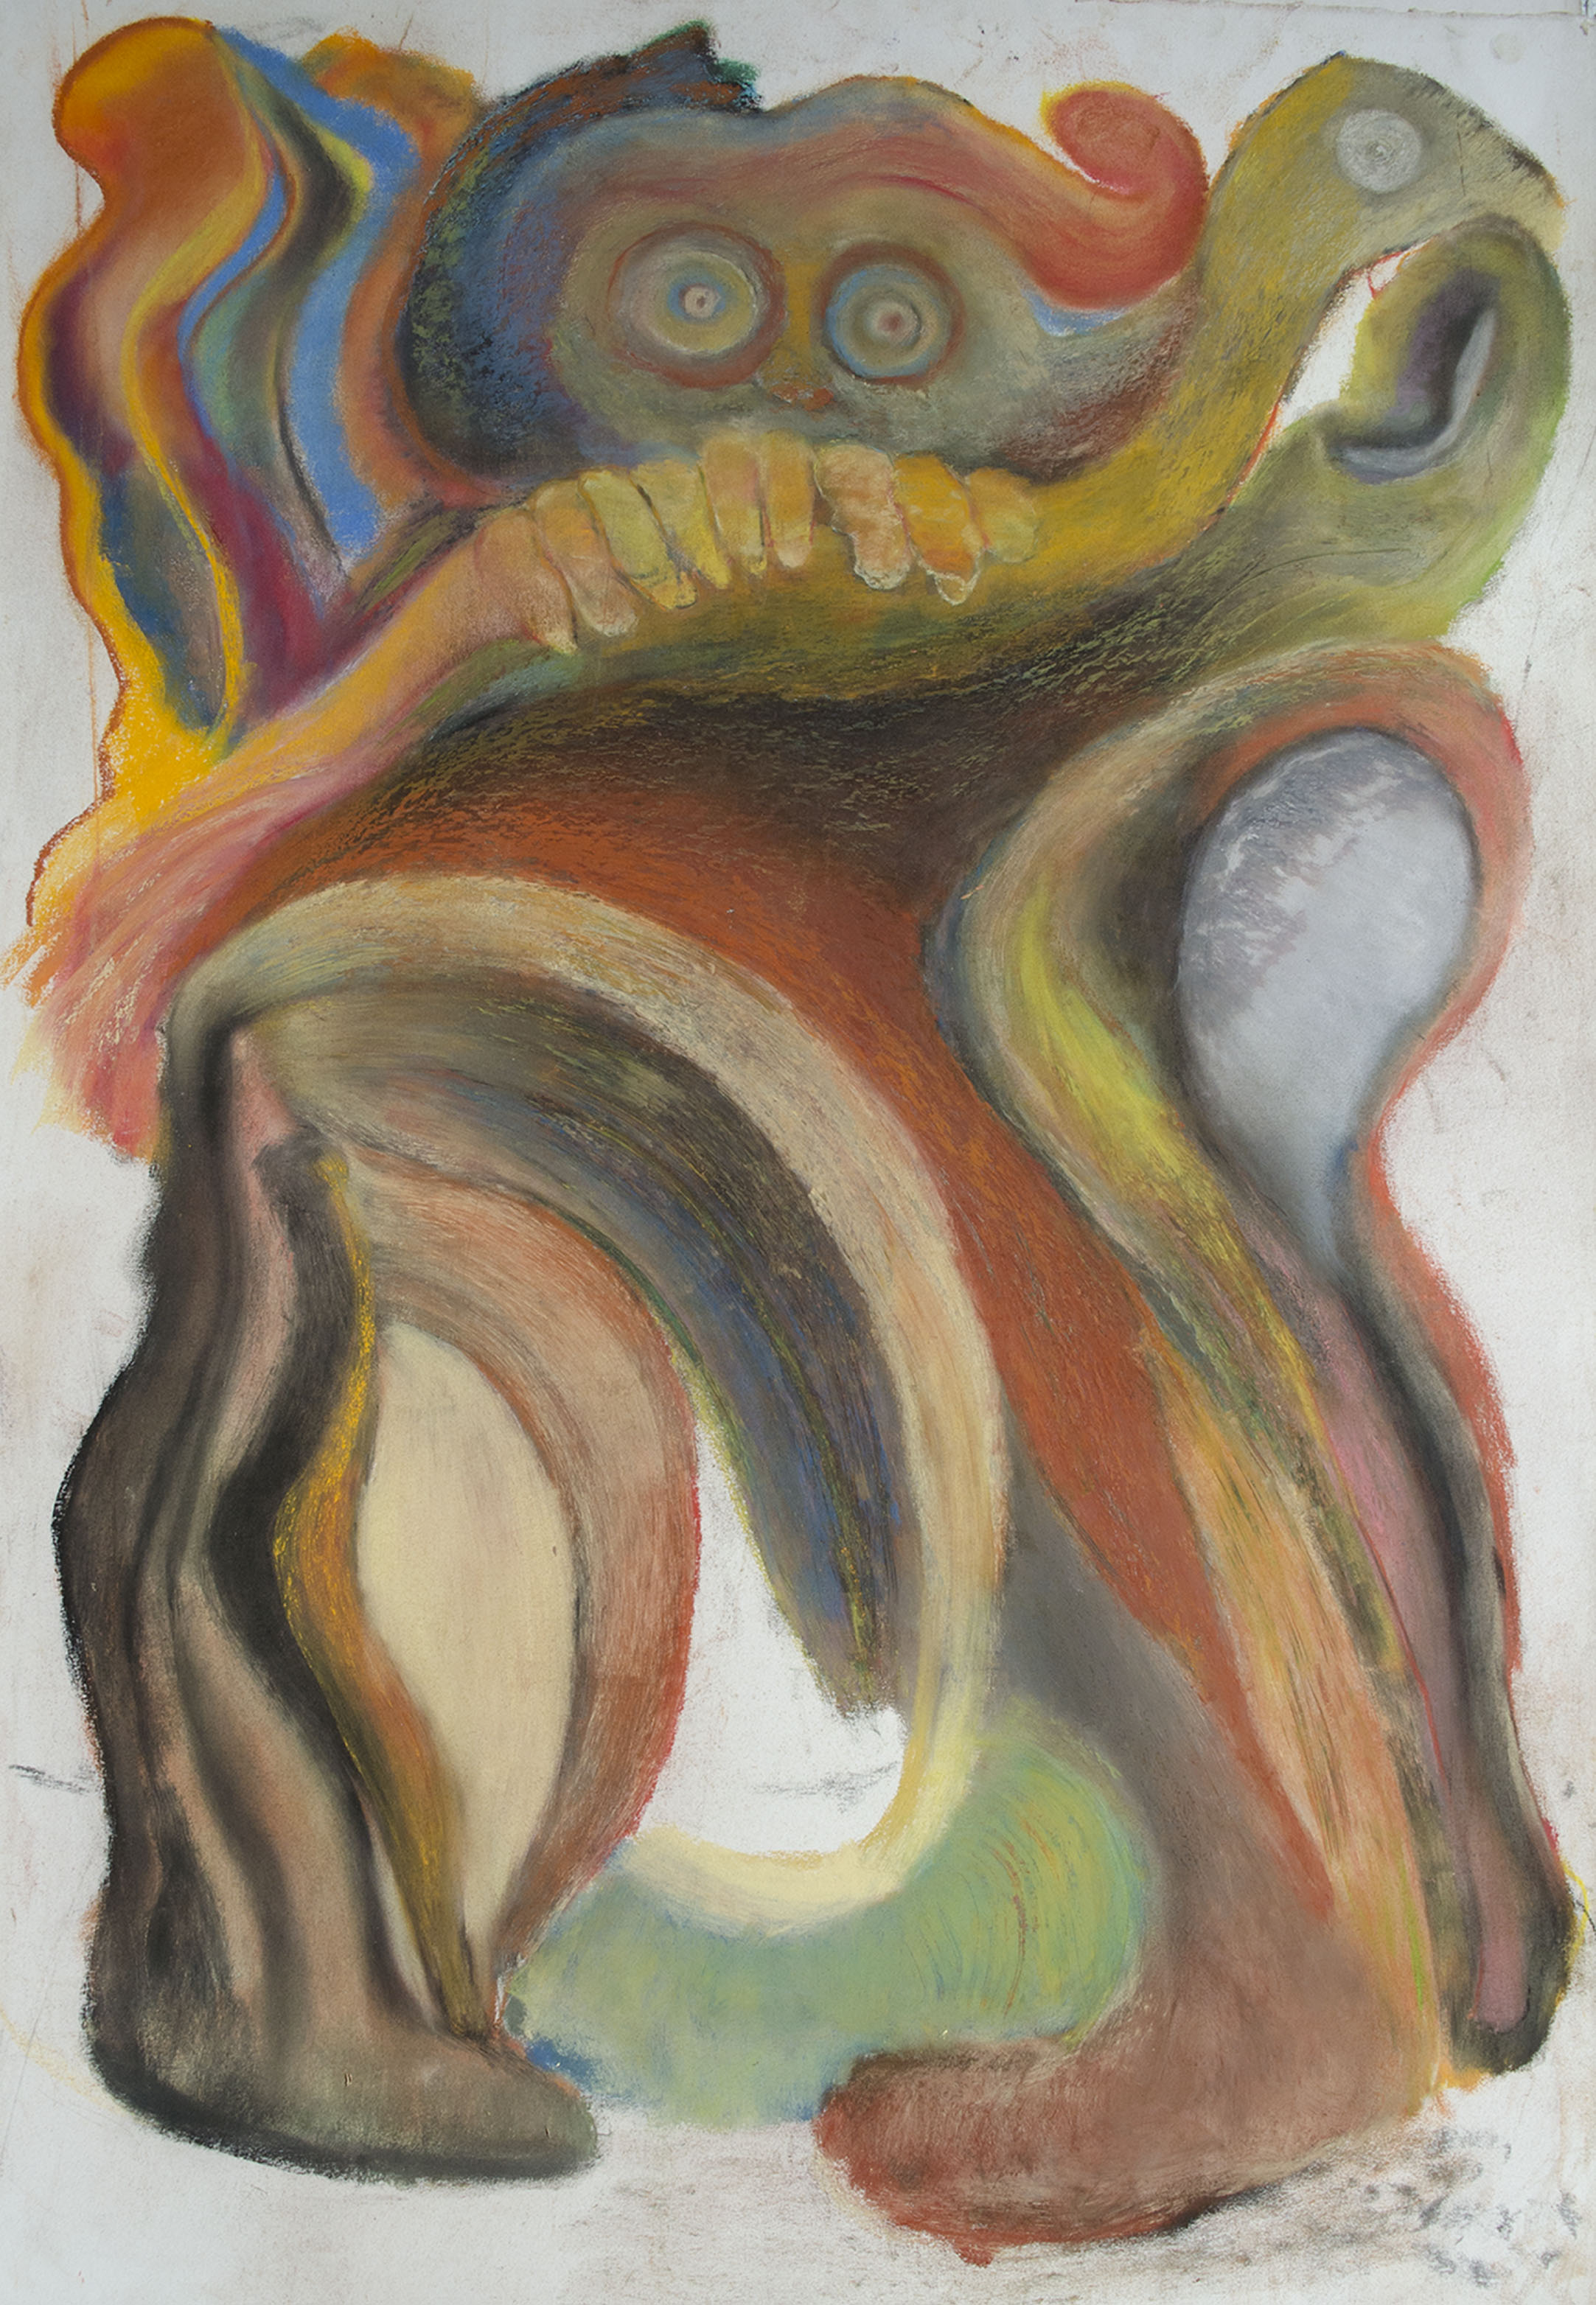 Title of the painting Untitled. Artist Peter Tillberg, ca. 2012–2013. Oil pastels on paper. Copyright Kerstin Schild-Tillberg.